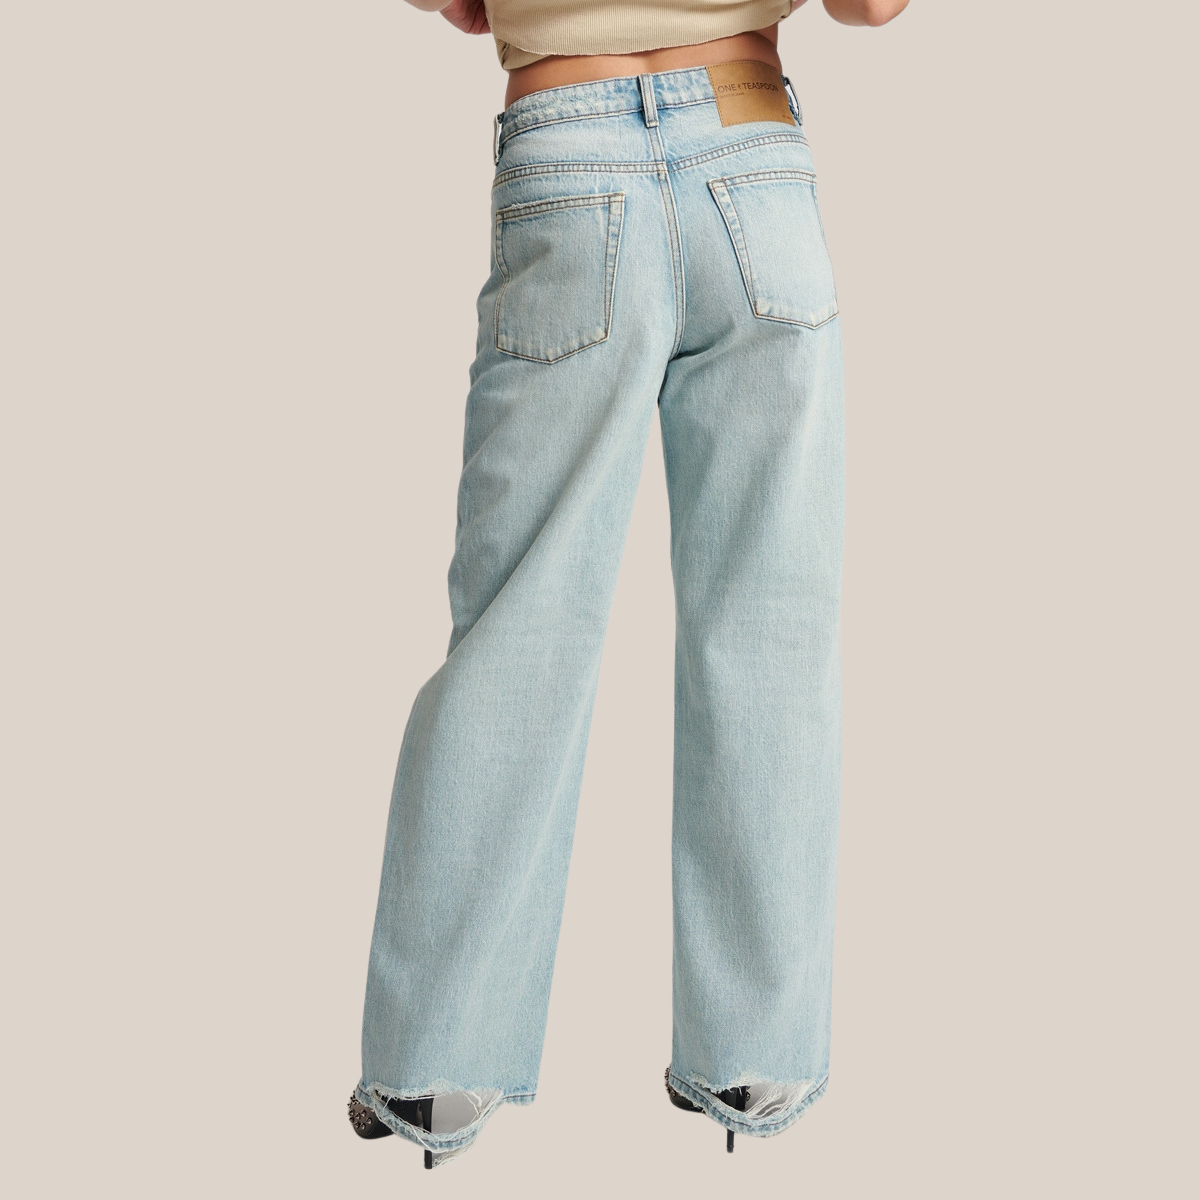 Gotstyle Fashion - One Teaspoon Denim 90s Vibe Mid Waist Wide Leg Flare Jeans - Light Blue